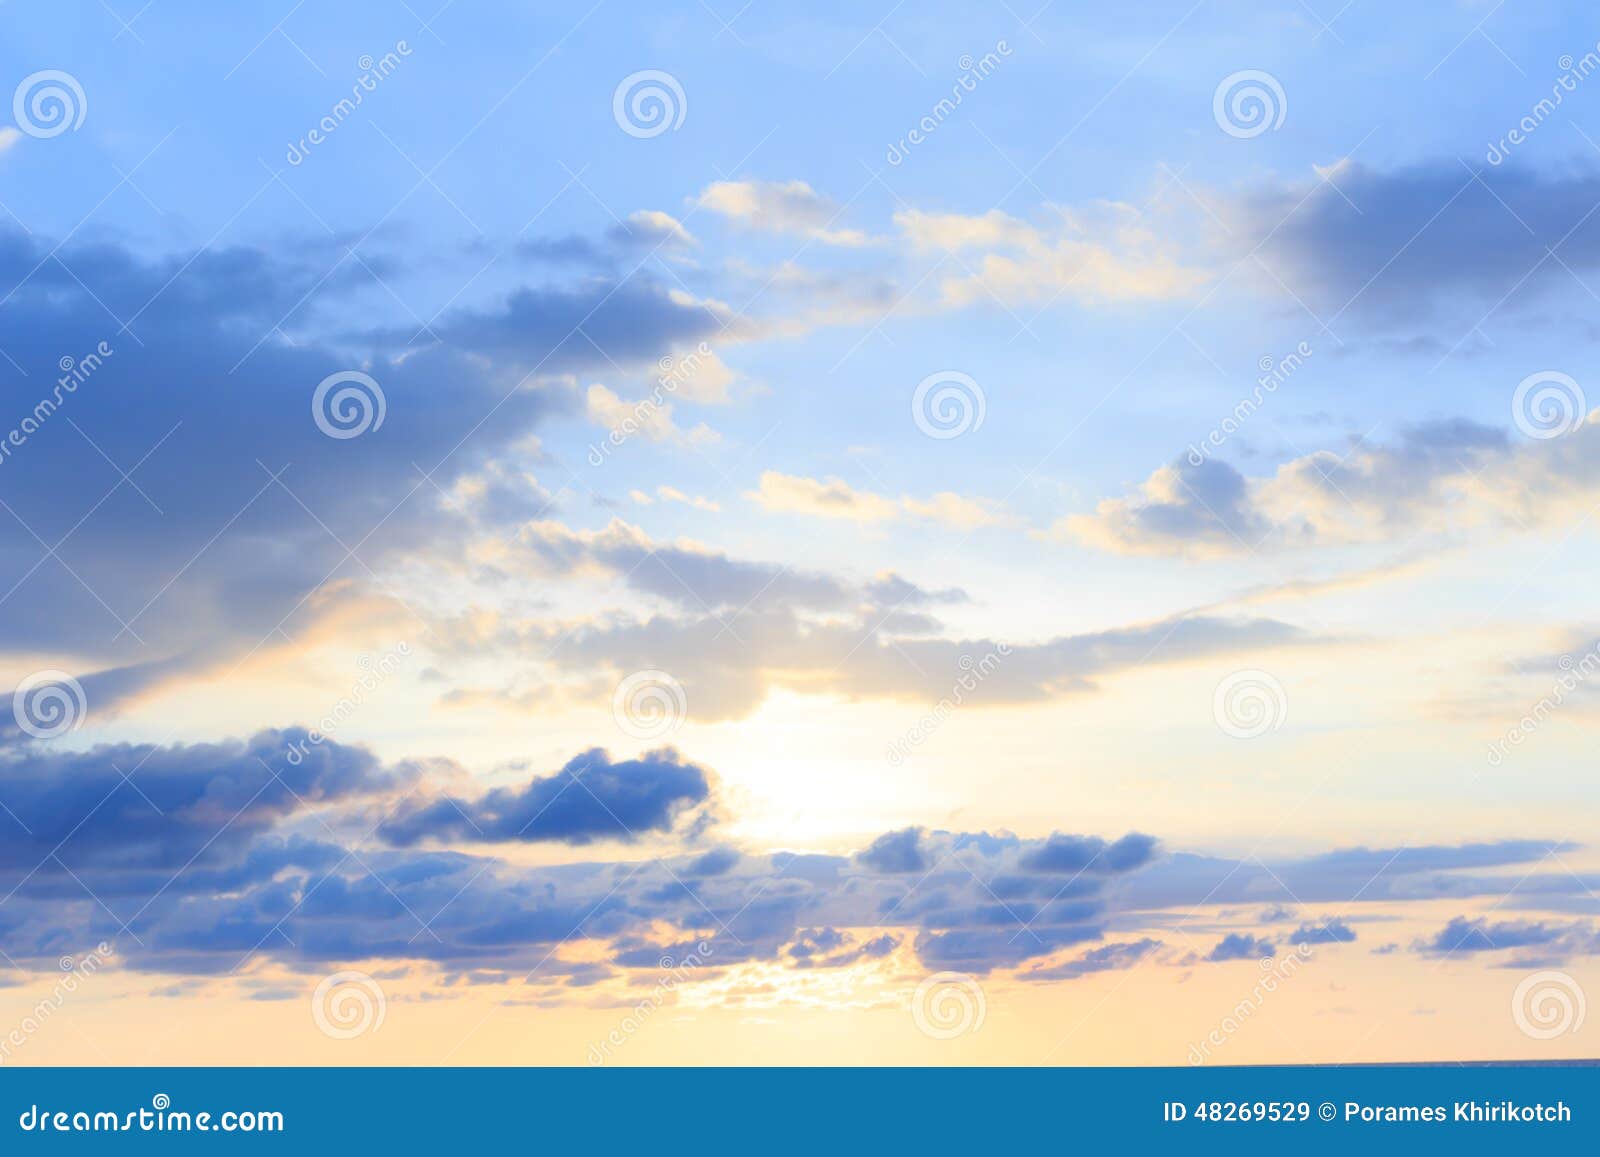 A Soft Cloud Background With A Pastel Color Blue To Orange Gradient Stock  Photo 48269529 - Megapixl